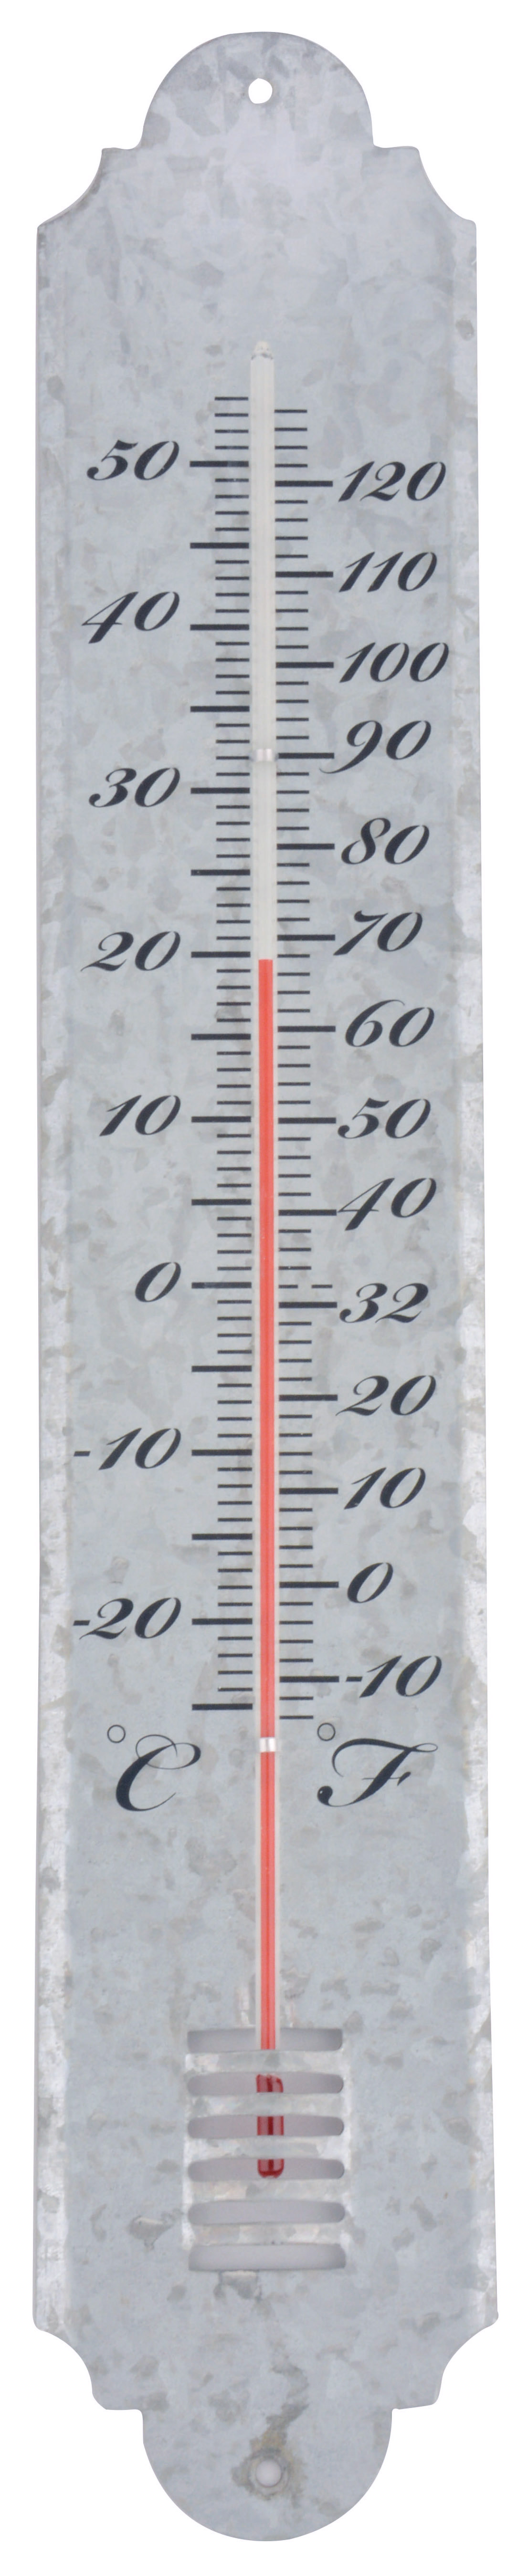 Fallen Fruits Thermometer 50cms (zinc)